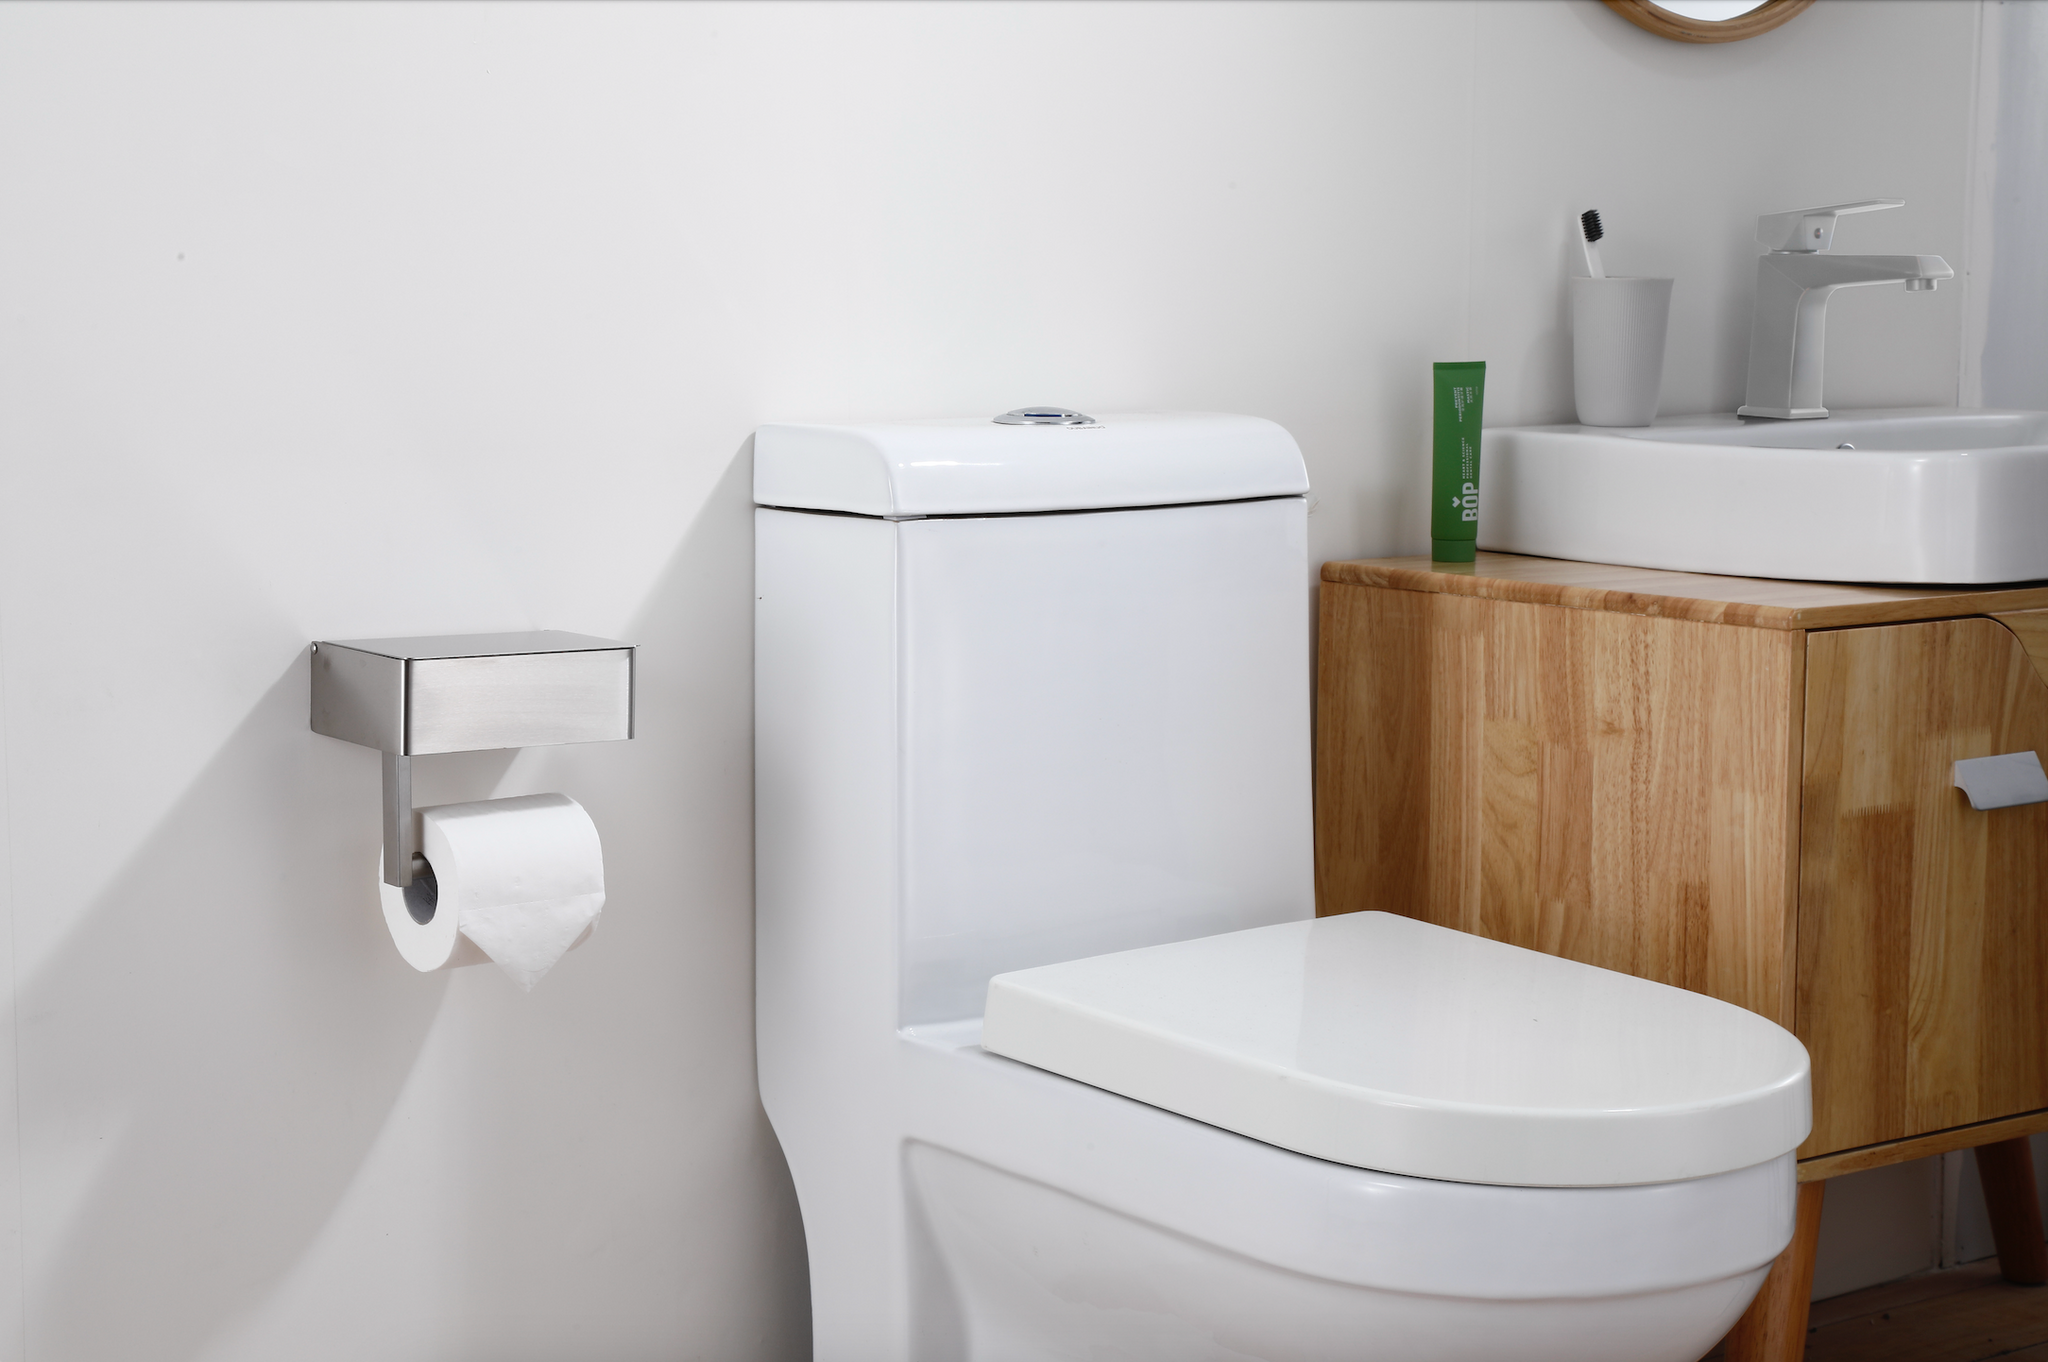 Day Moon Designs Matte Black Toilet Paper Holder with Shelf, Wipe Holder  for Bathroom Flushable Wipes Dispenser Toilet Paper and Wipes Holder Toilet